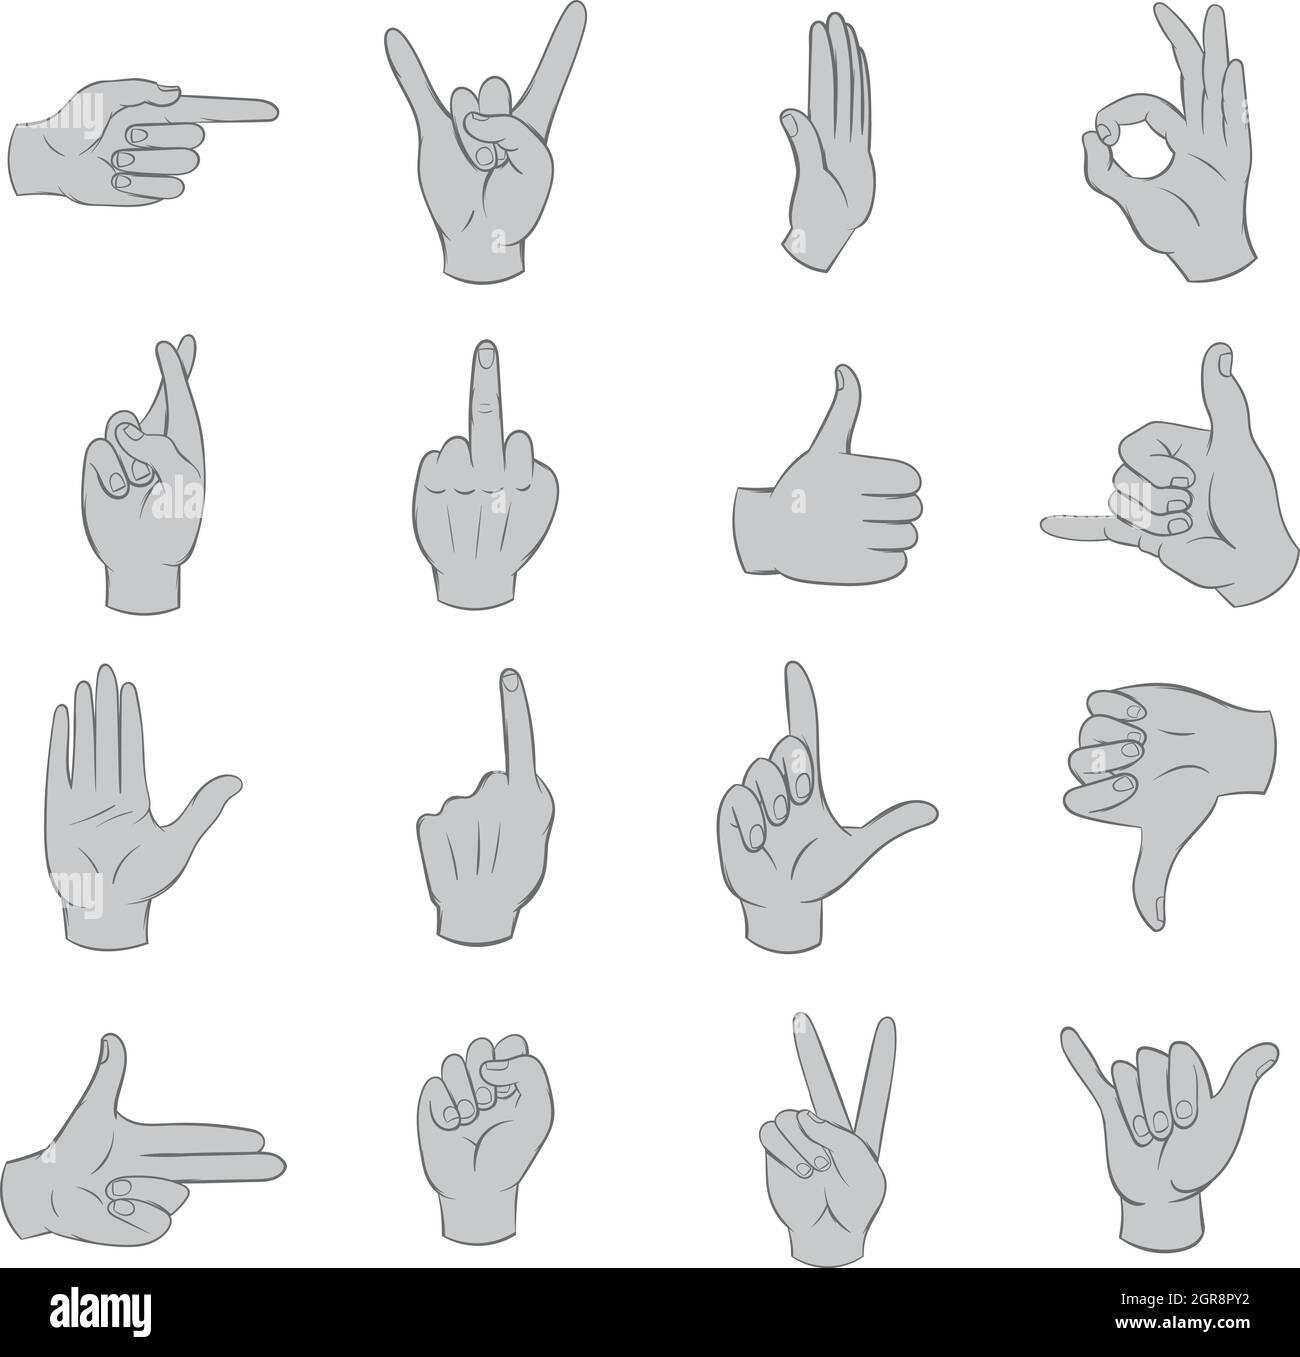 Hand gesture icons set, black monochrome style Stock Vector